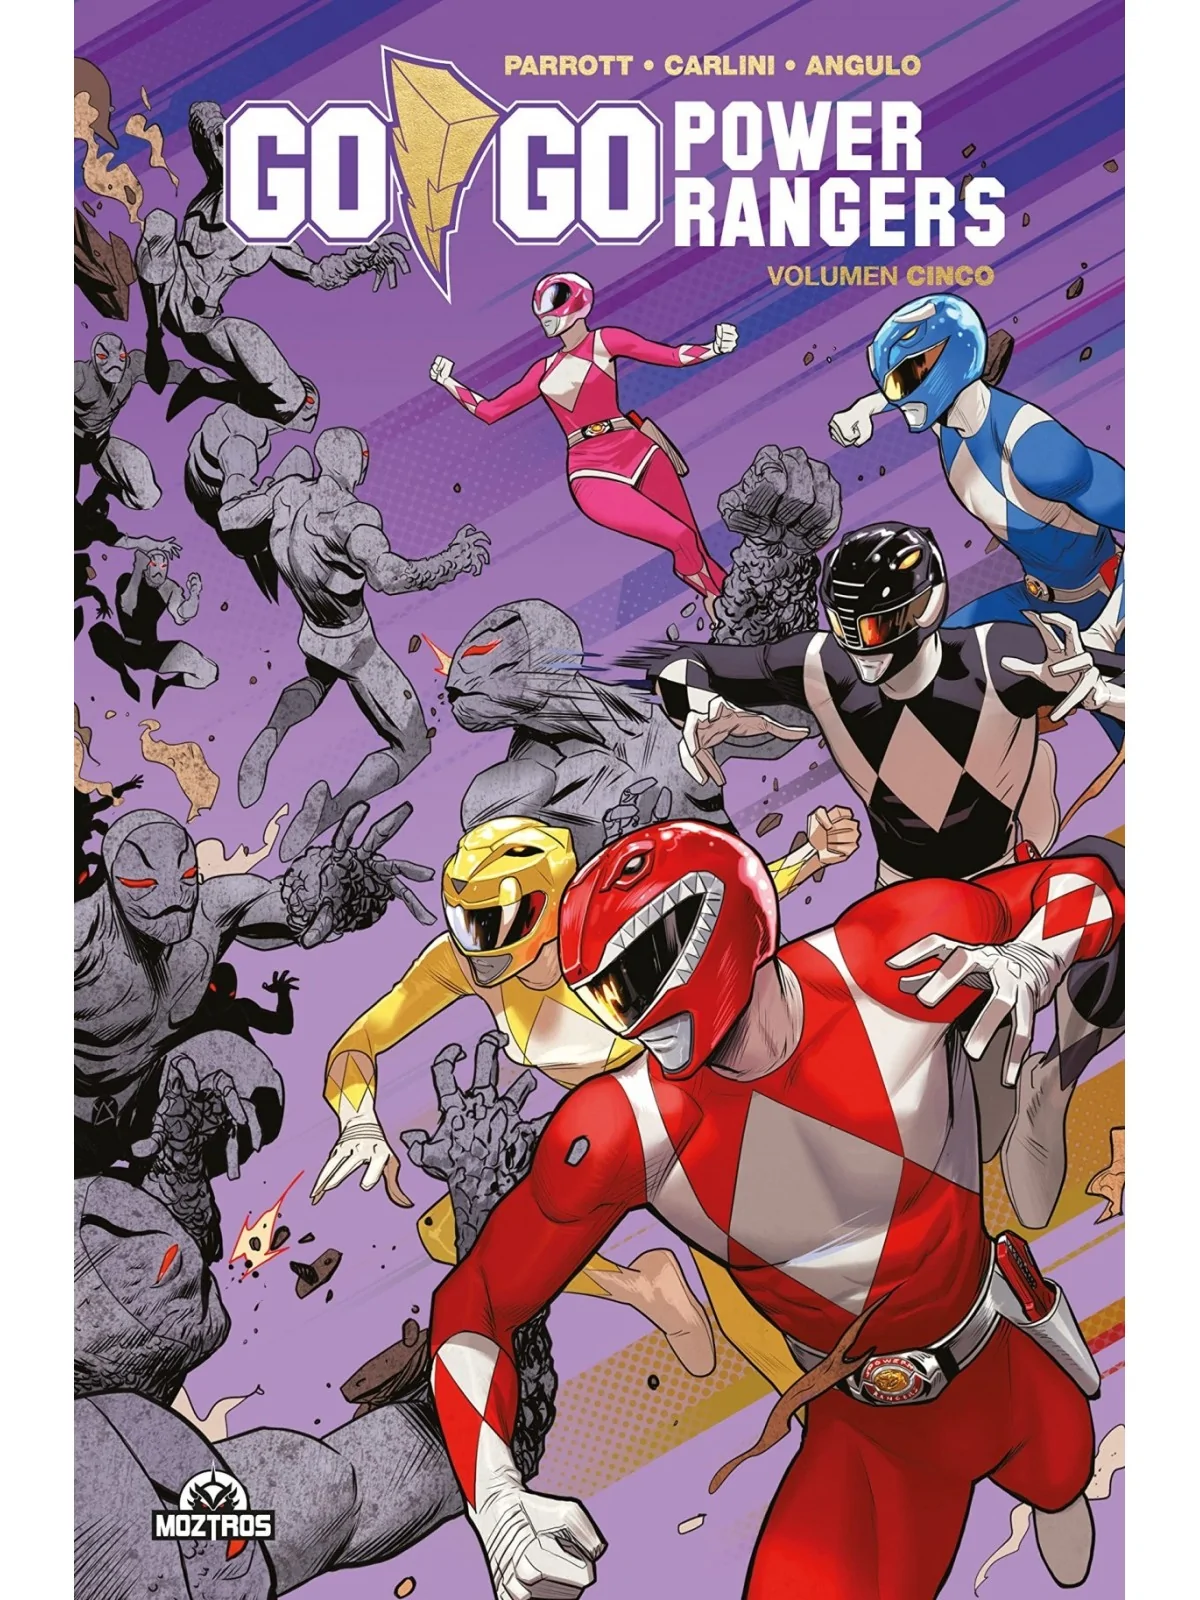 Comprar Go Go Power Rangers 05 barato al mejor precio 17,10 € de Moztr